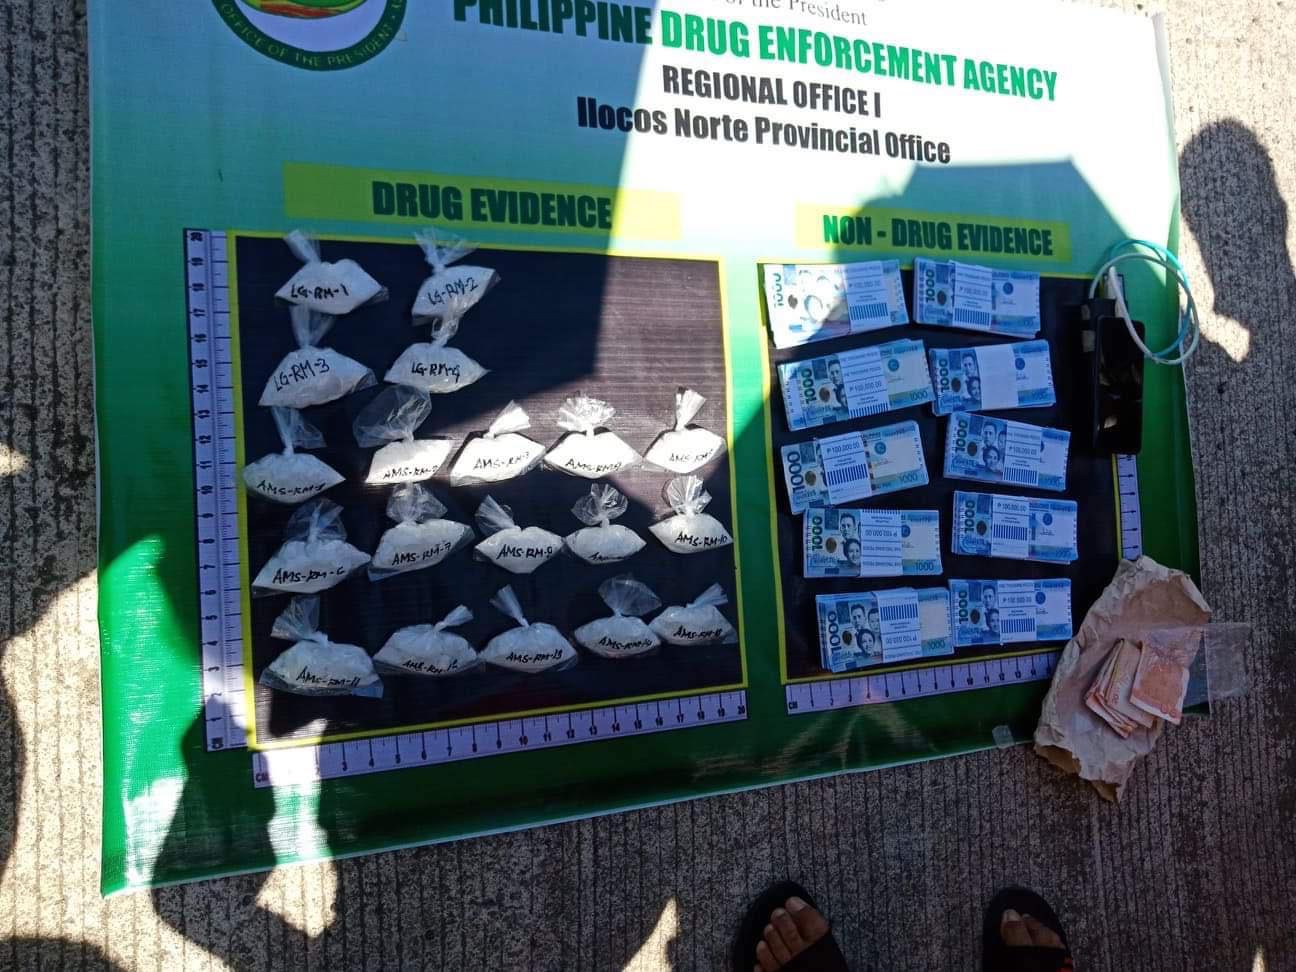 P5.2M 'shabu' seized in Ilocos Norte buy-bust